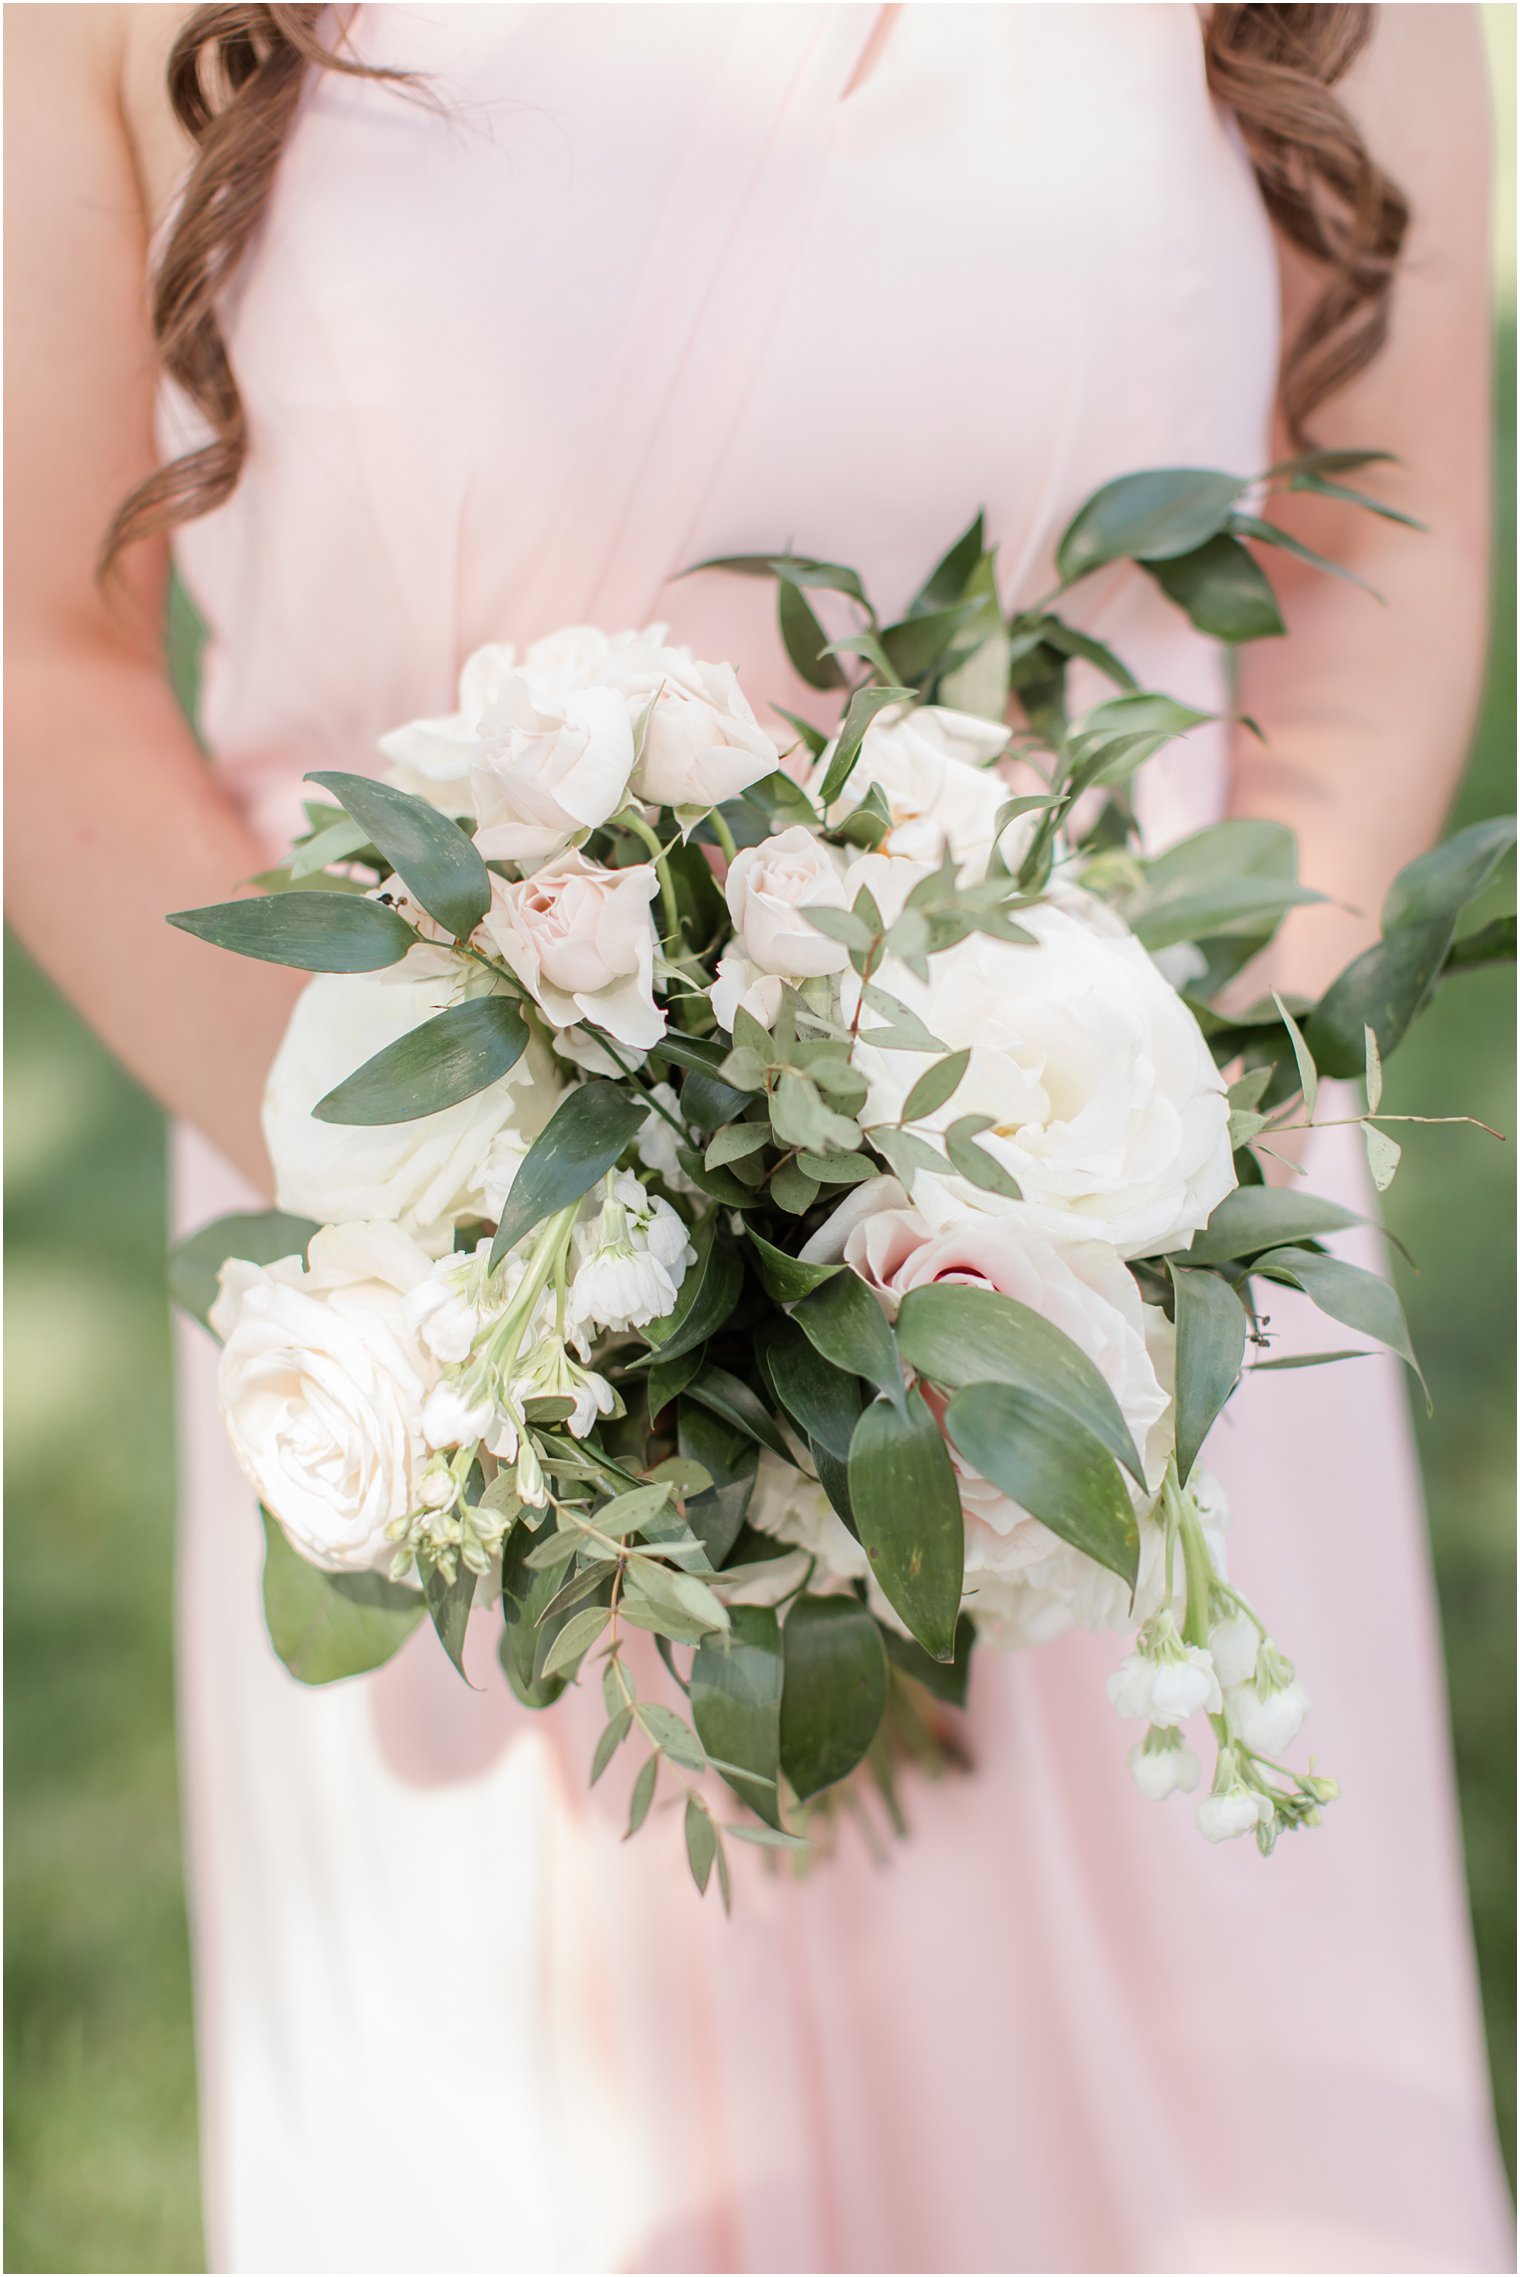 Wedding bouquet by Laurelwood Designs